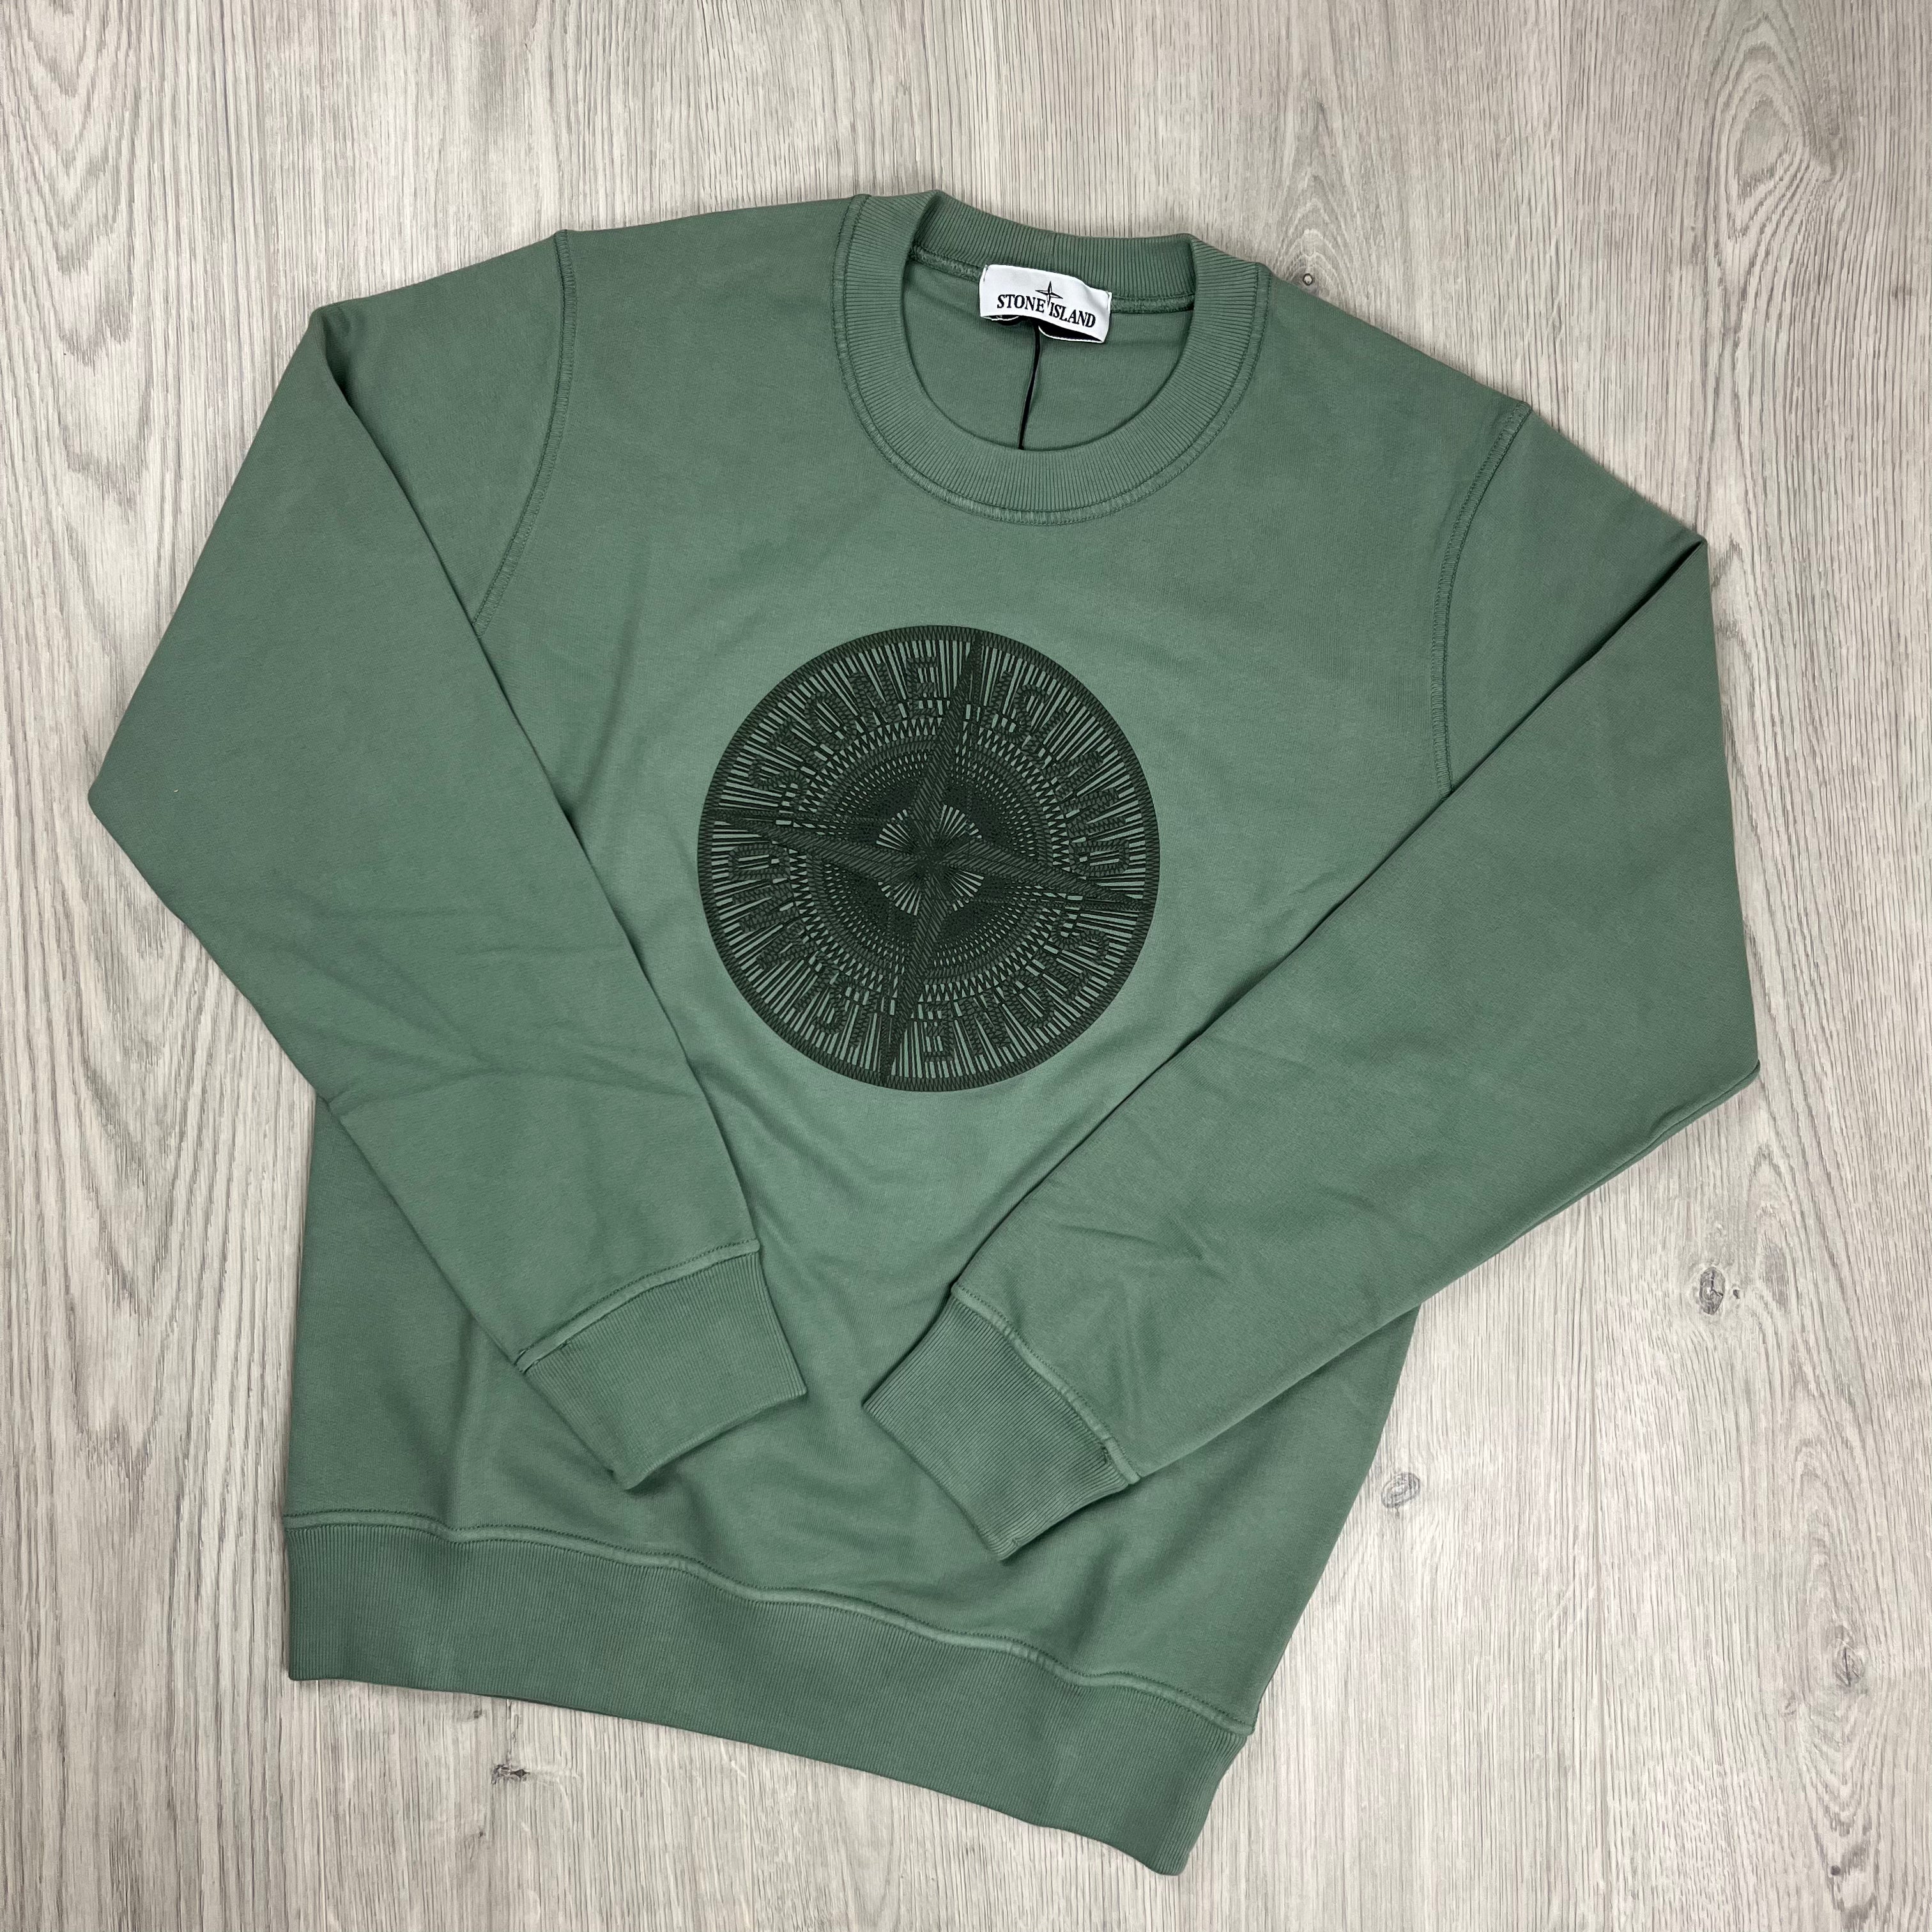 Stone Island Embroidered Sweatshirt